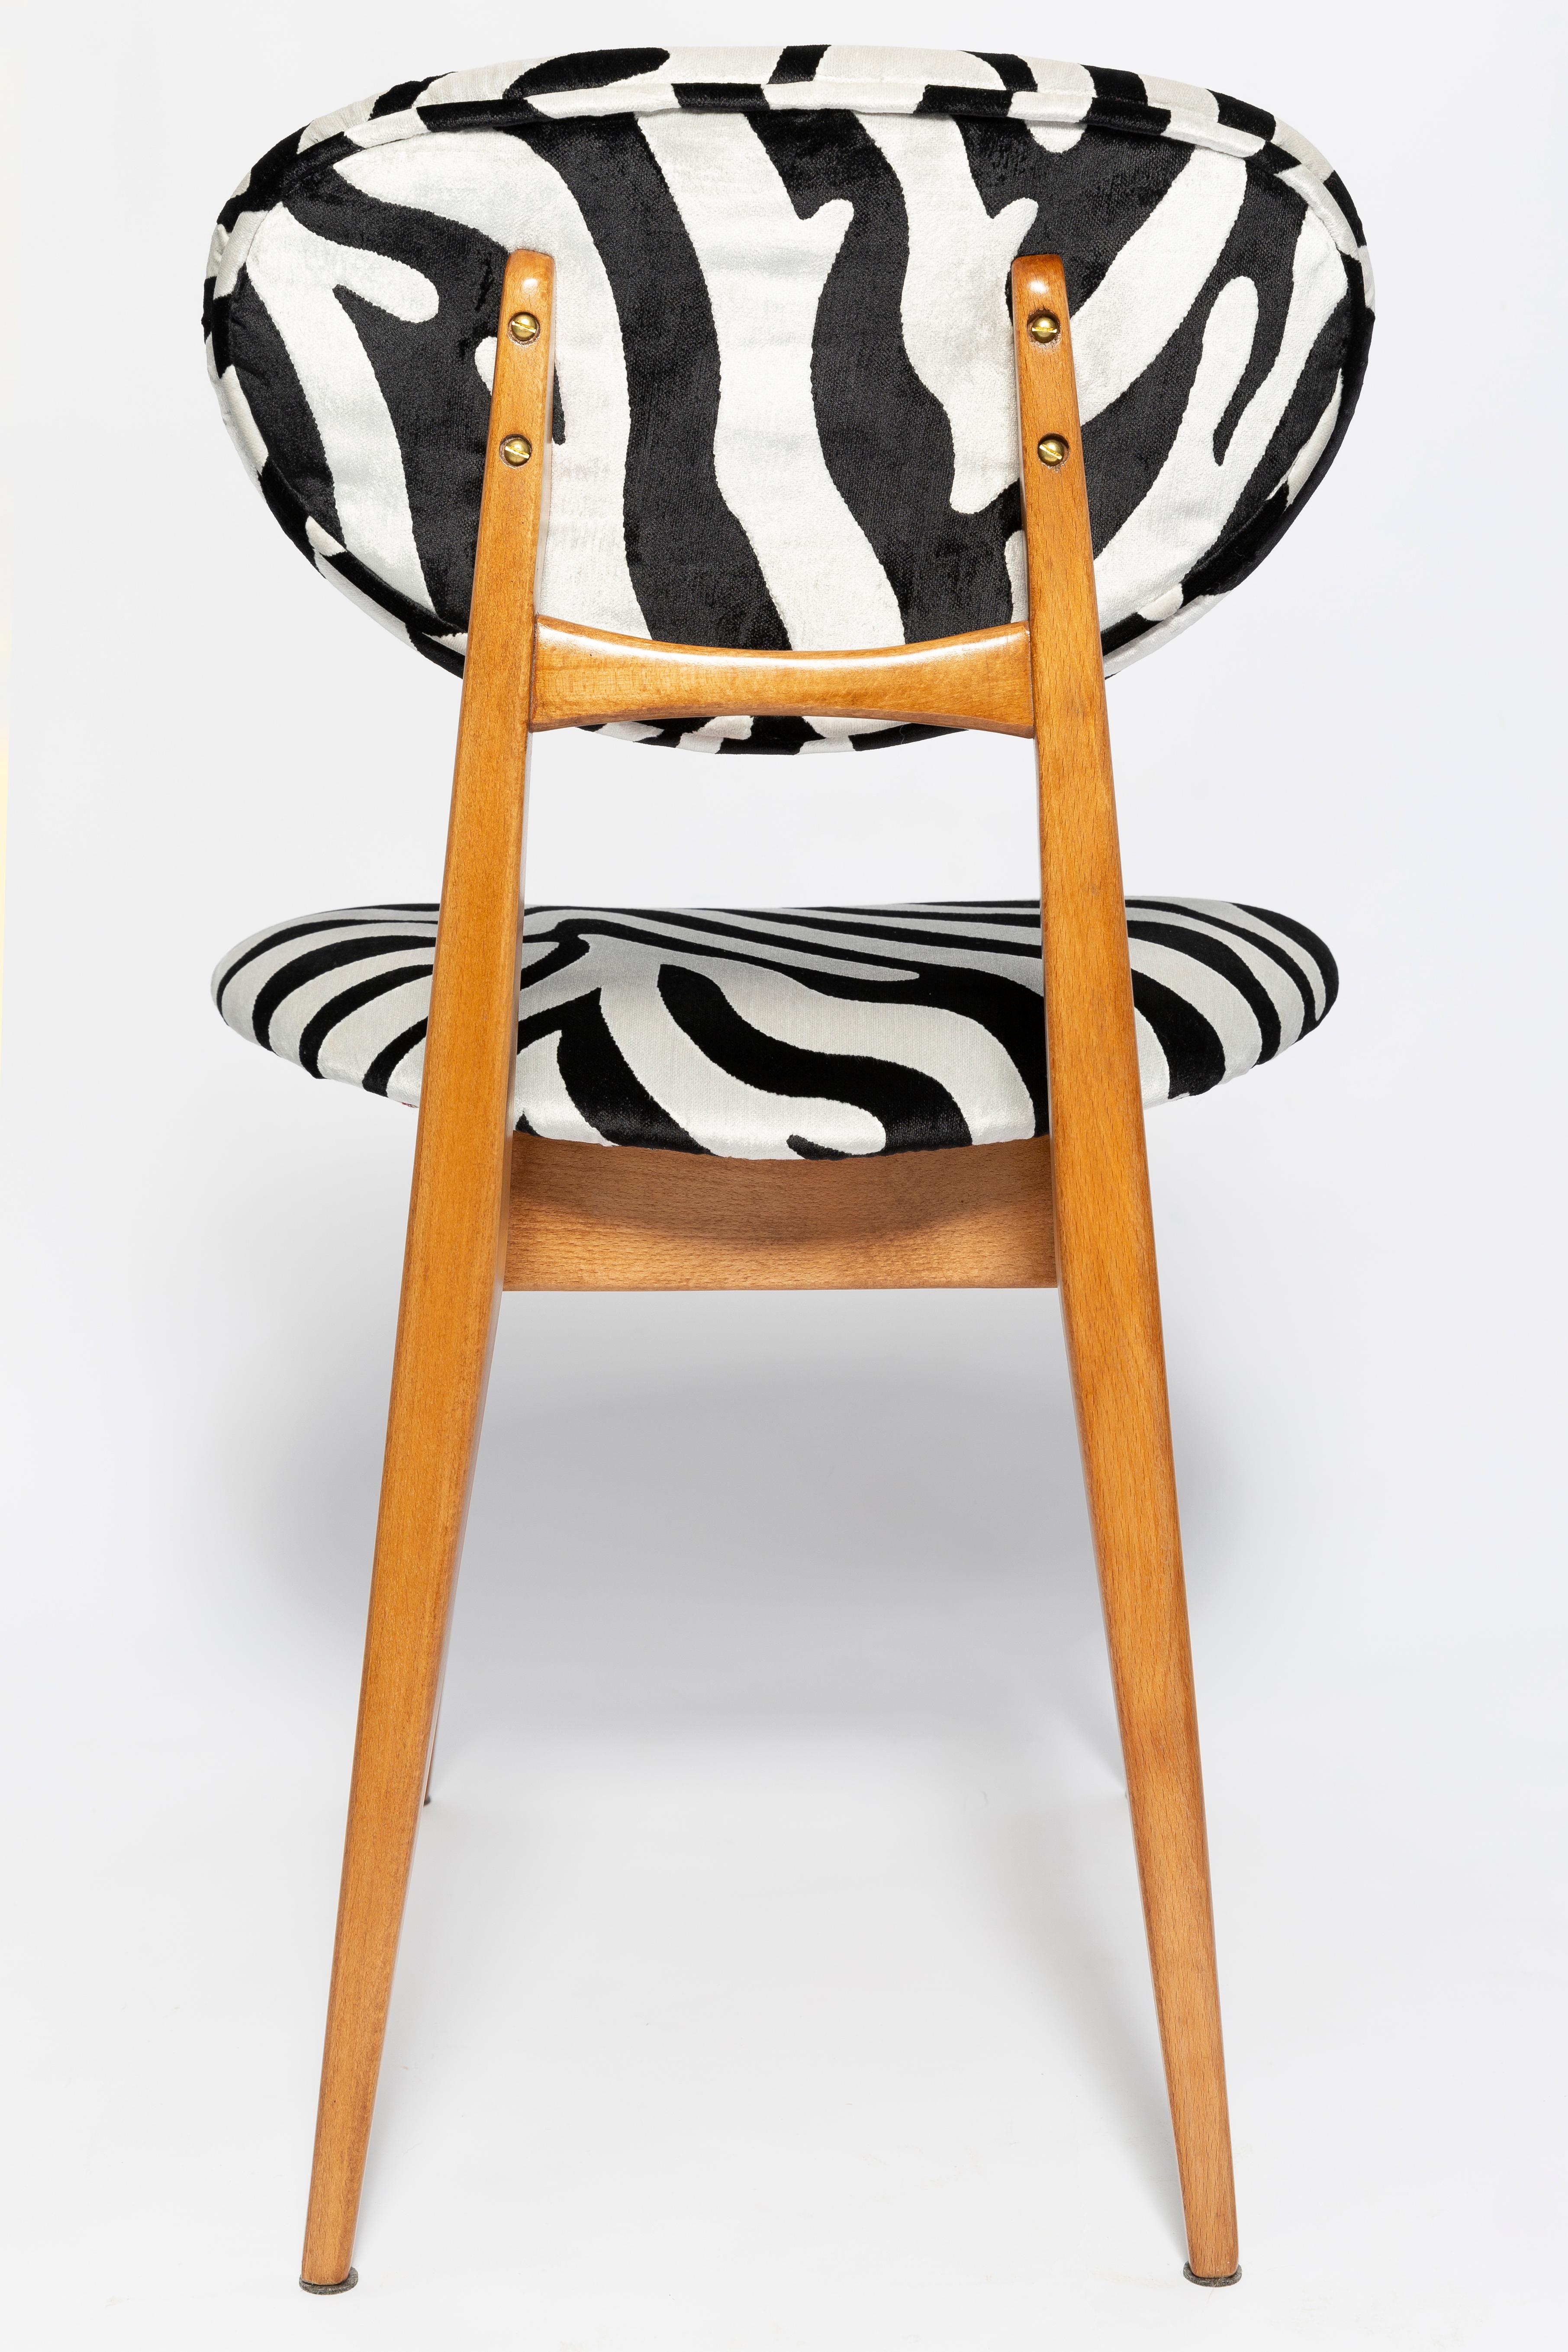 Hand-Crafted Mid-Century Zebra Chair, Type 200/128, by J. Kedziorek, Europe, 1960s For Sale